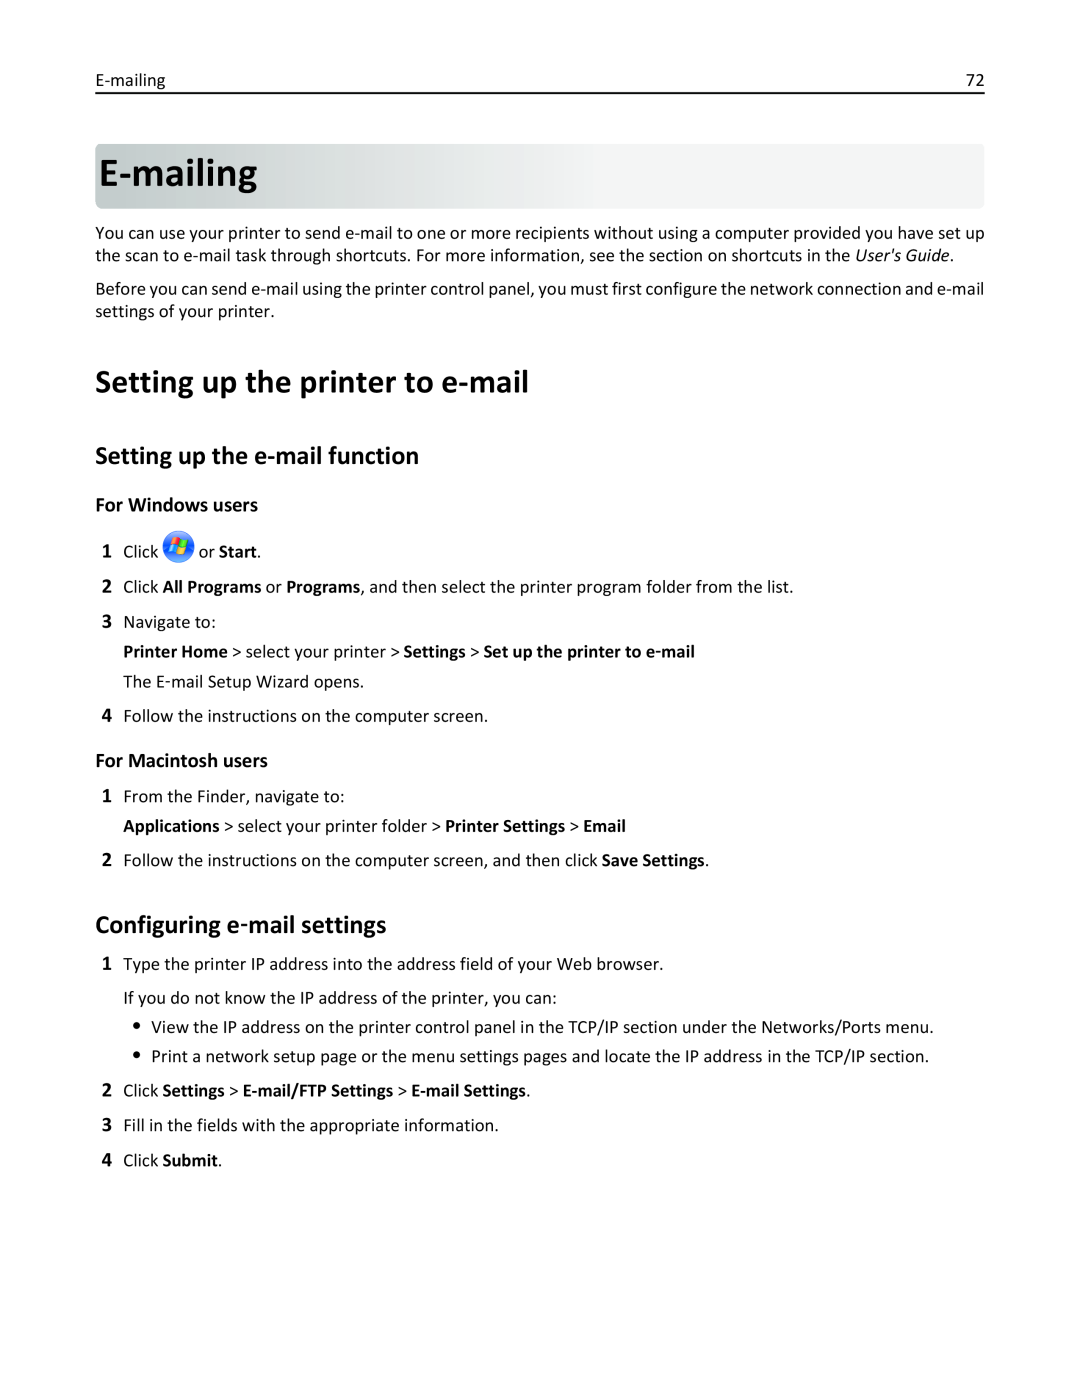 Lexmark PRO4000C E-mailing, Setting up the printer to e-mail, Setting up the e-mail function, Configuring e‑mail settings 